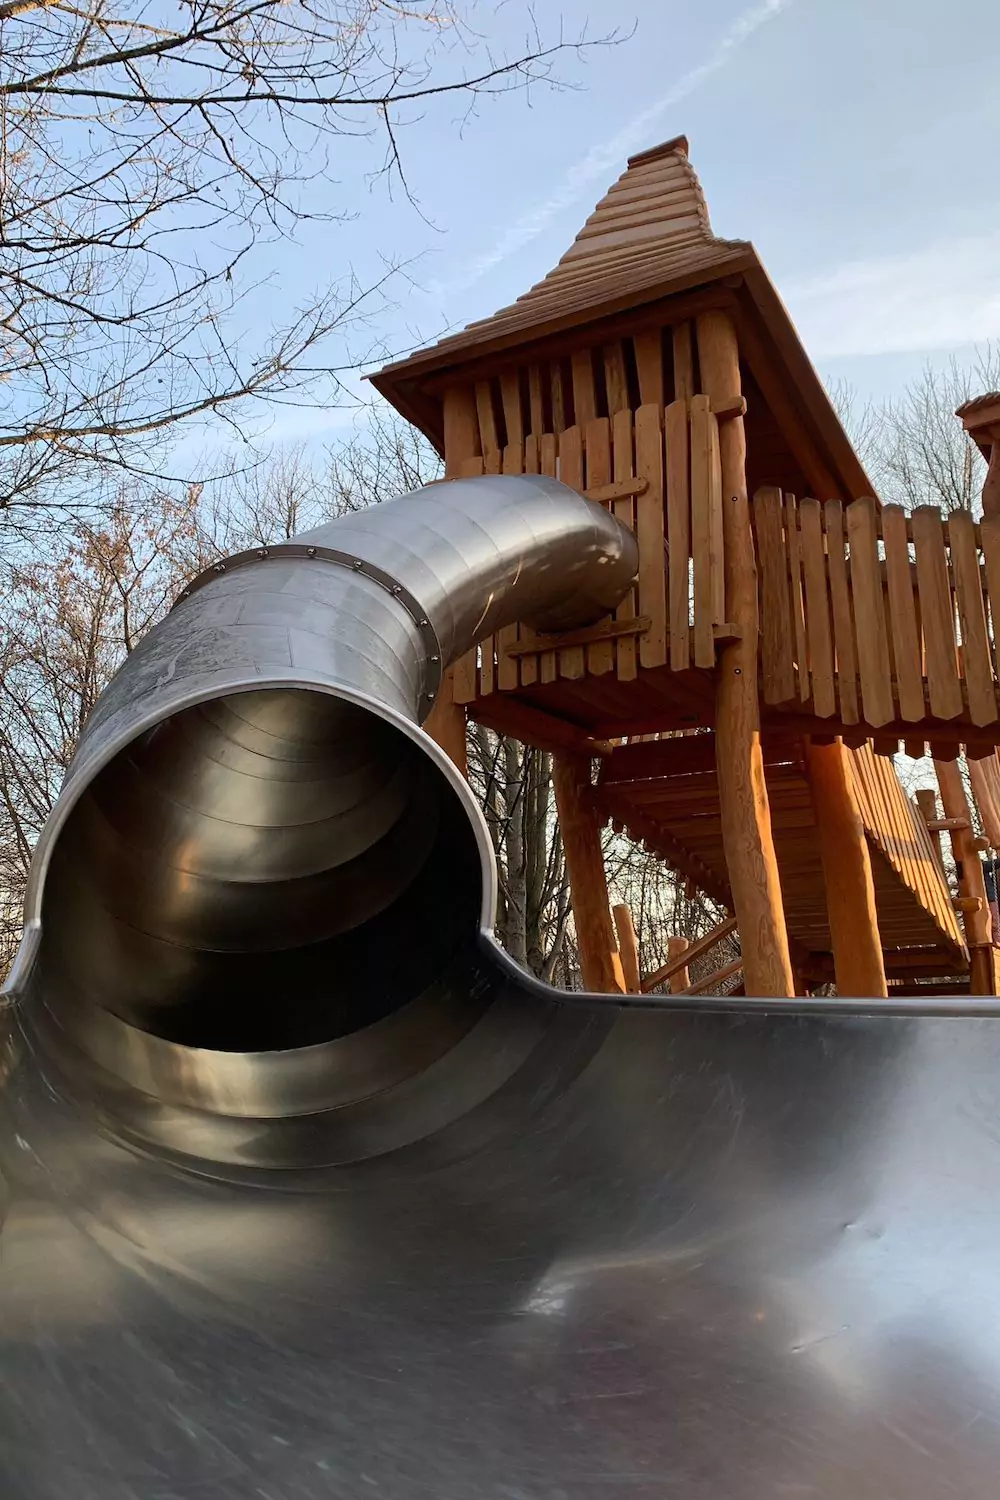 Playground steel tube slide in the park